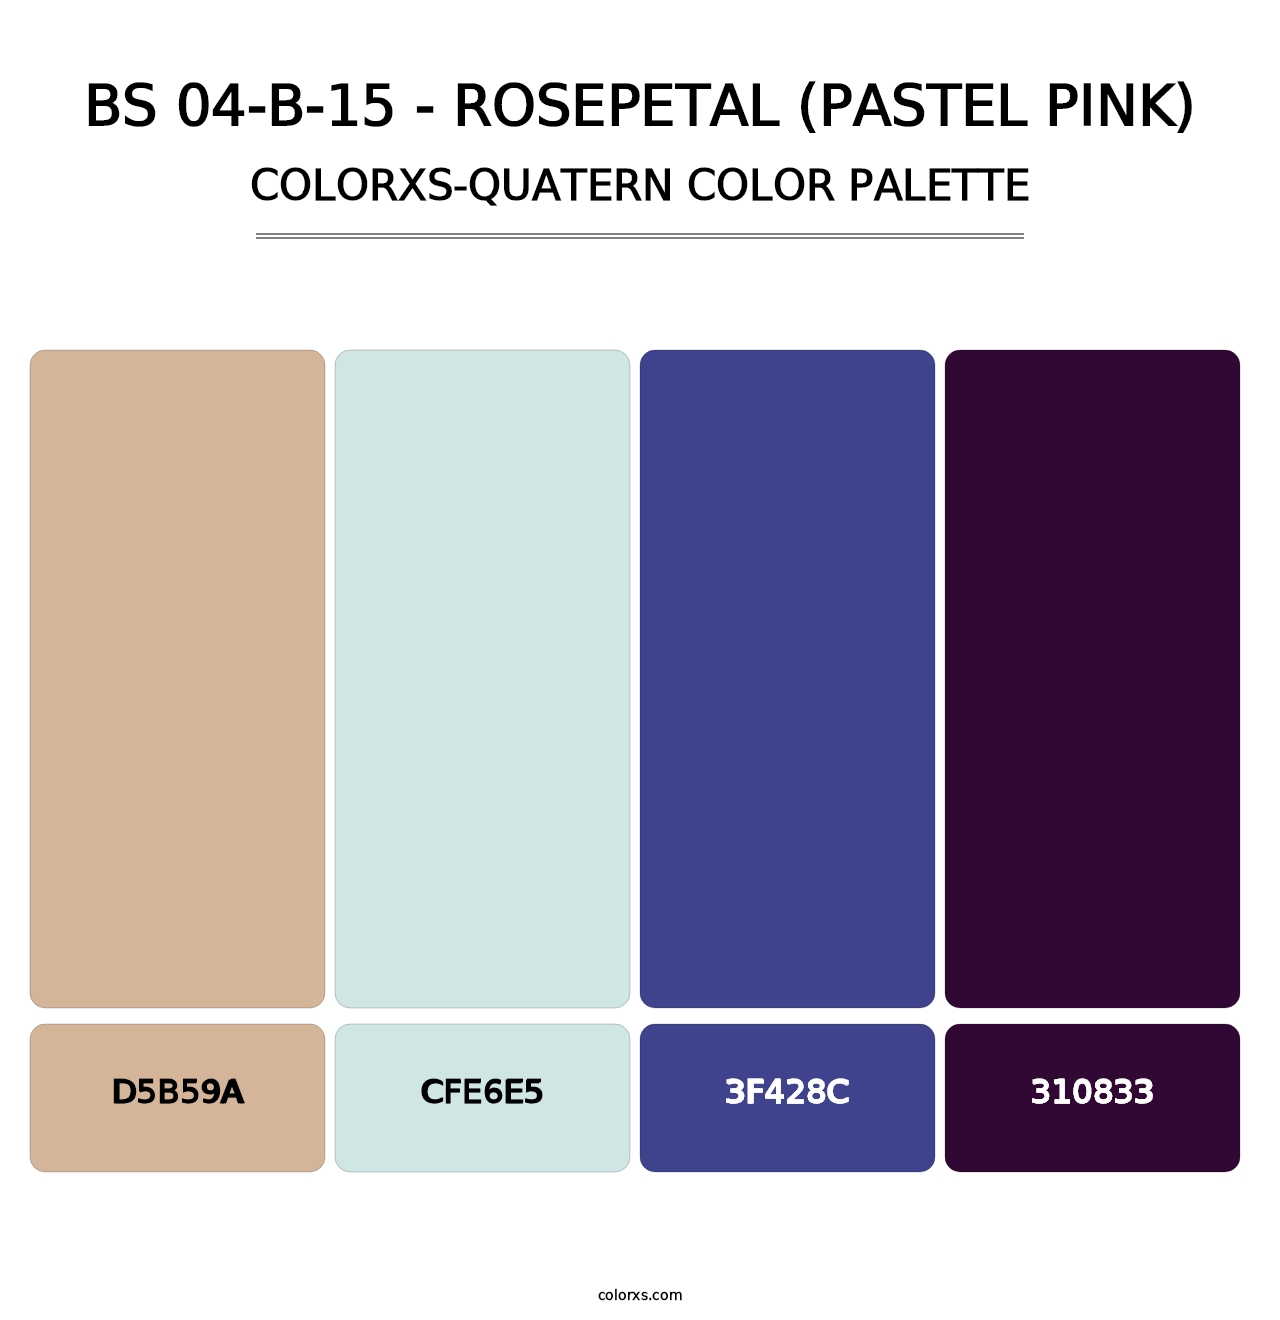 BS 04-B-15 - Rosepetal (Pastel Pink) - Colorxs Quatern Palette